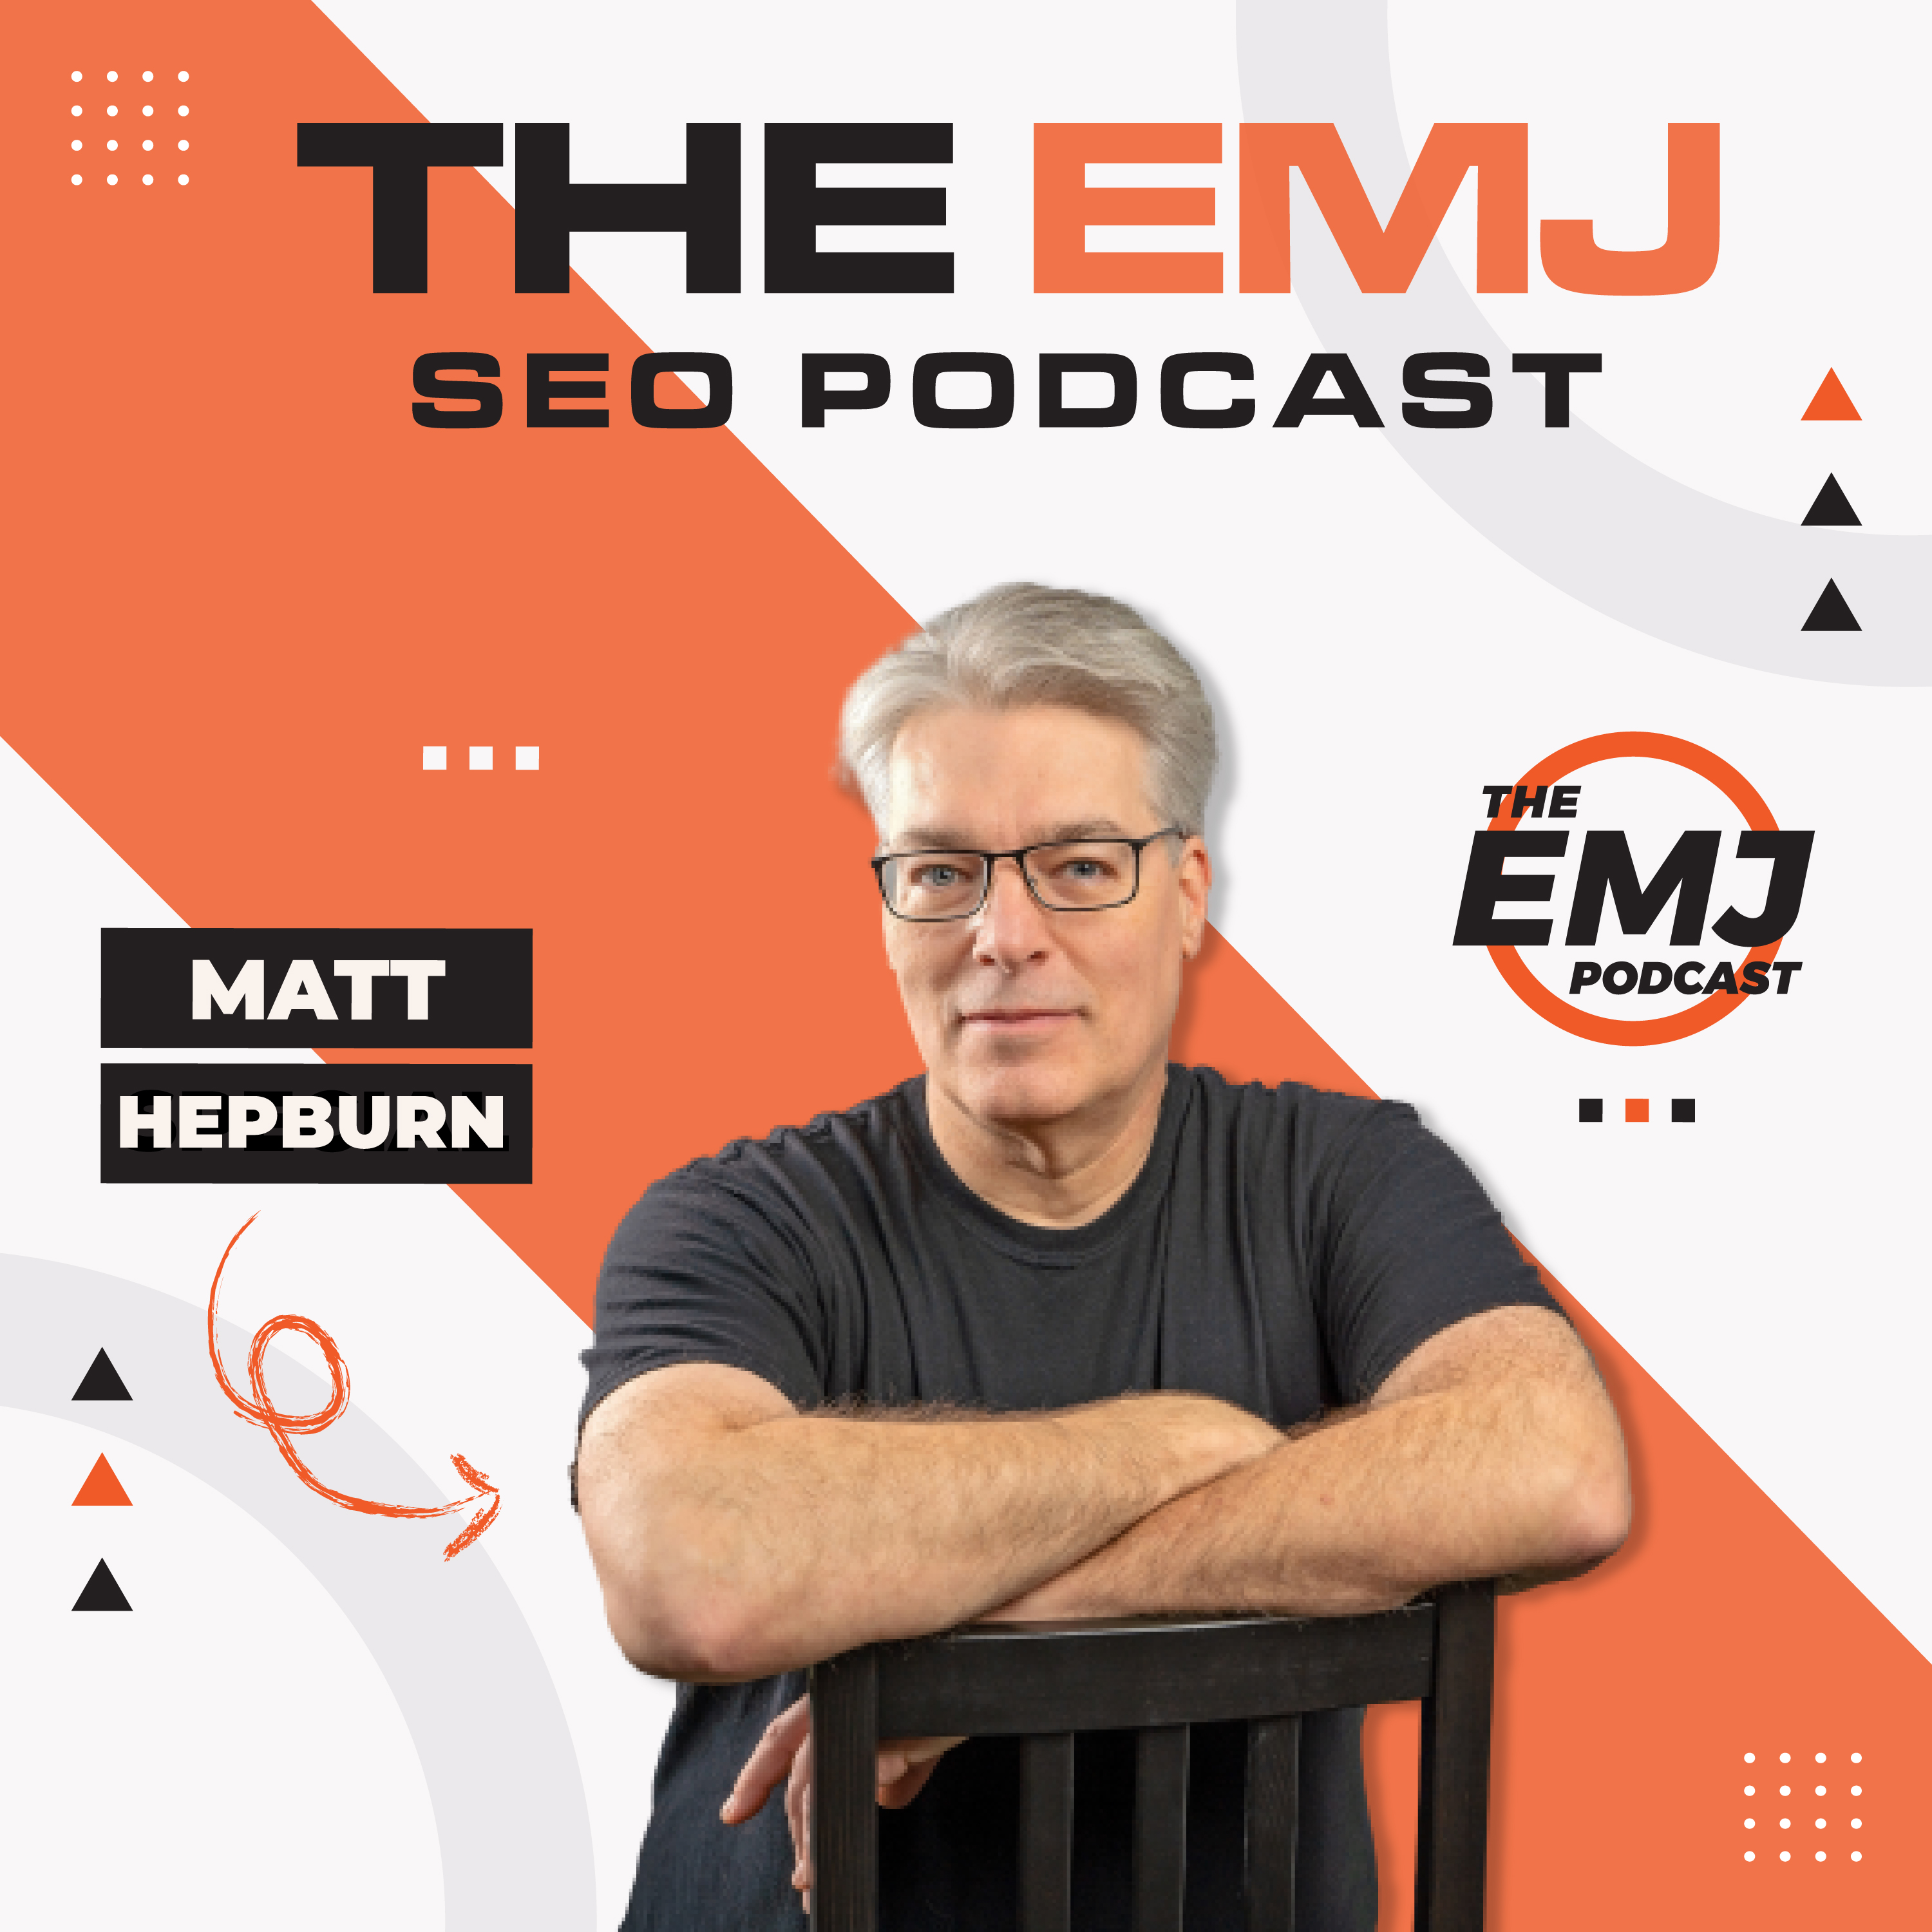 Artwork for podcast The EMJ SEO Podcast